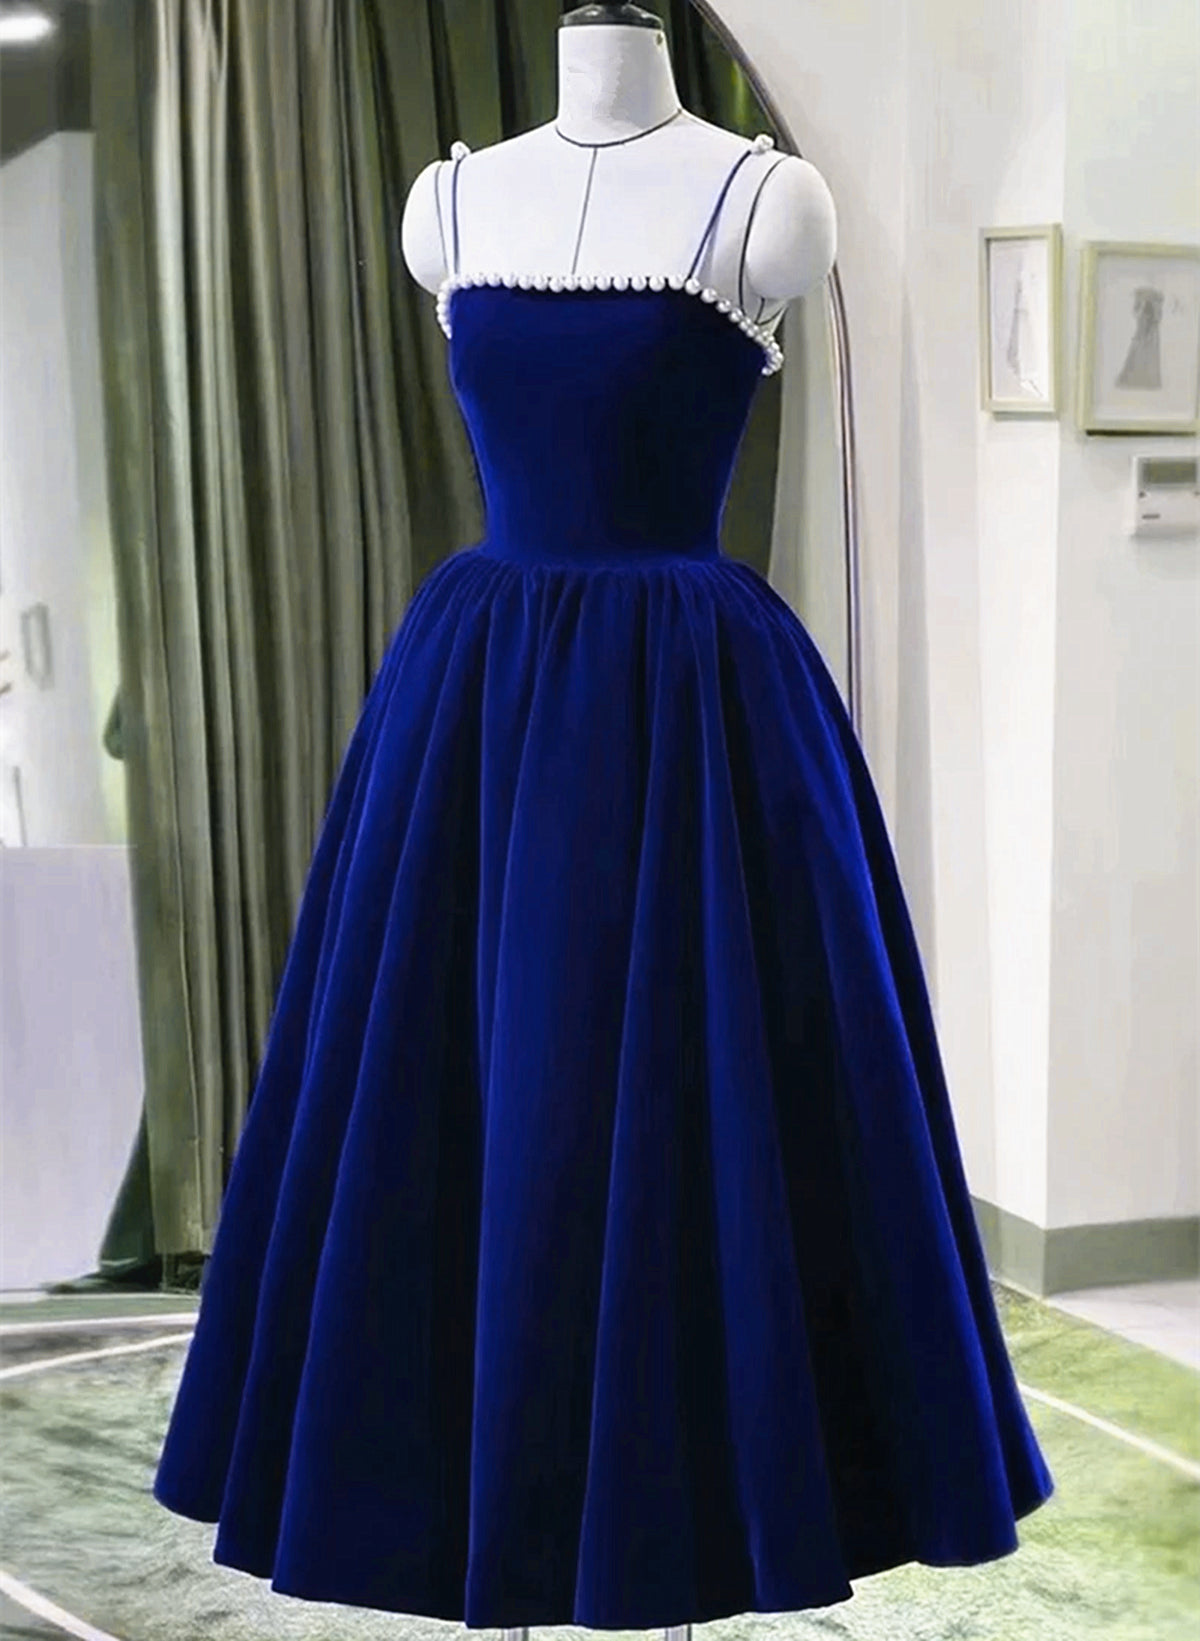 Blue Tea Length Velvet Straps Pearls Corset Formal Dress, Blue Corset Homecoming Dress outfit, Bridesmaid Dresses Blushes